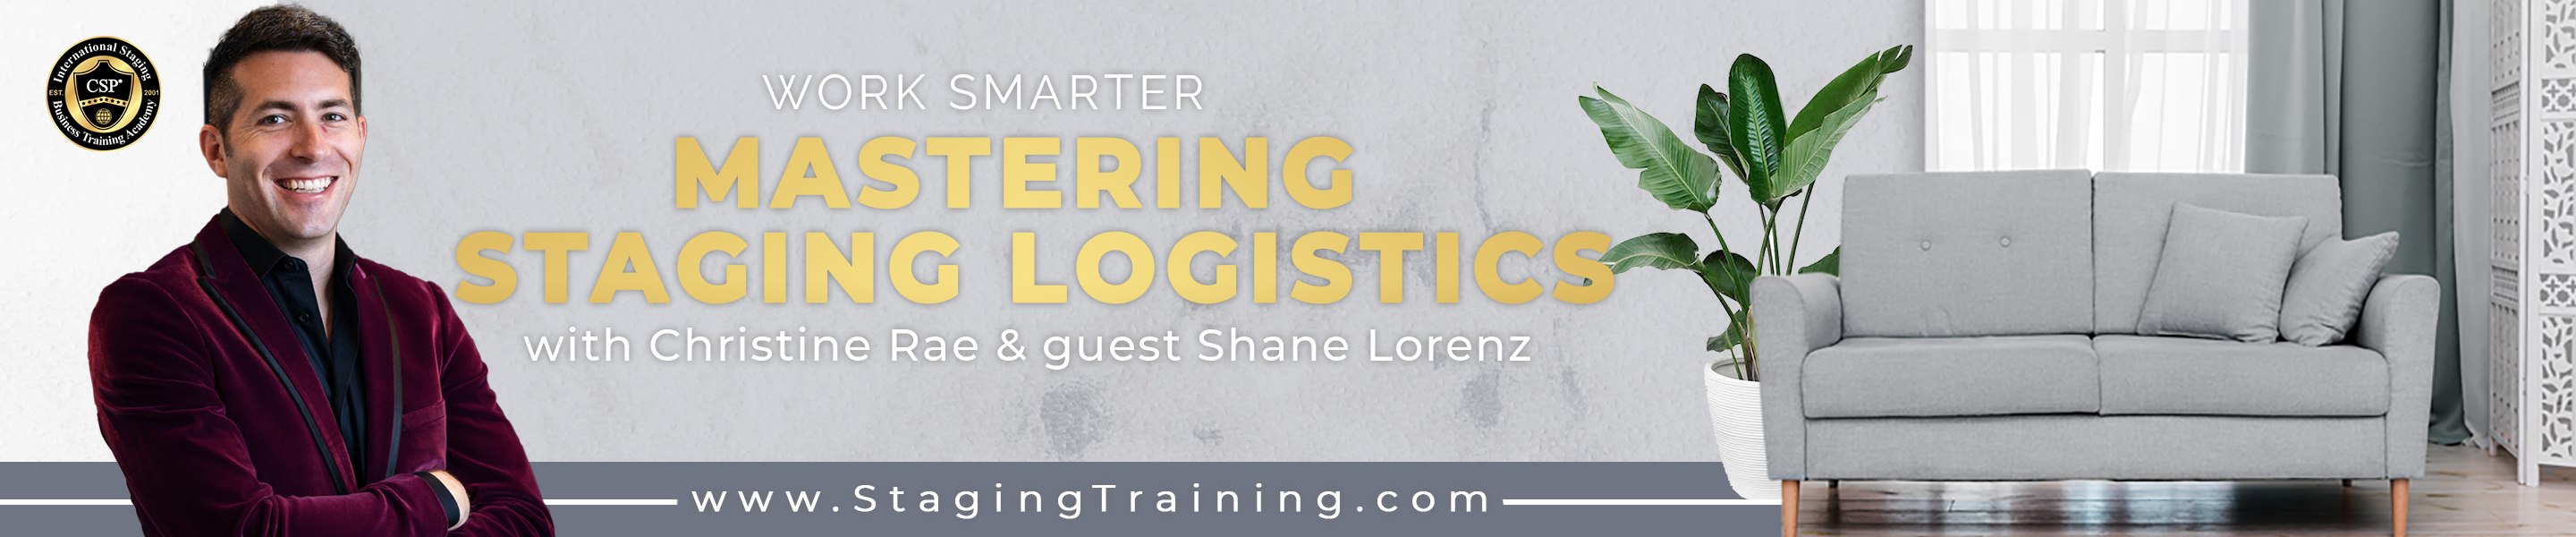 mastering staging logistics